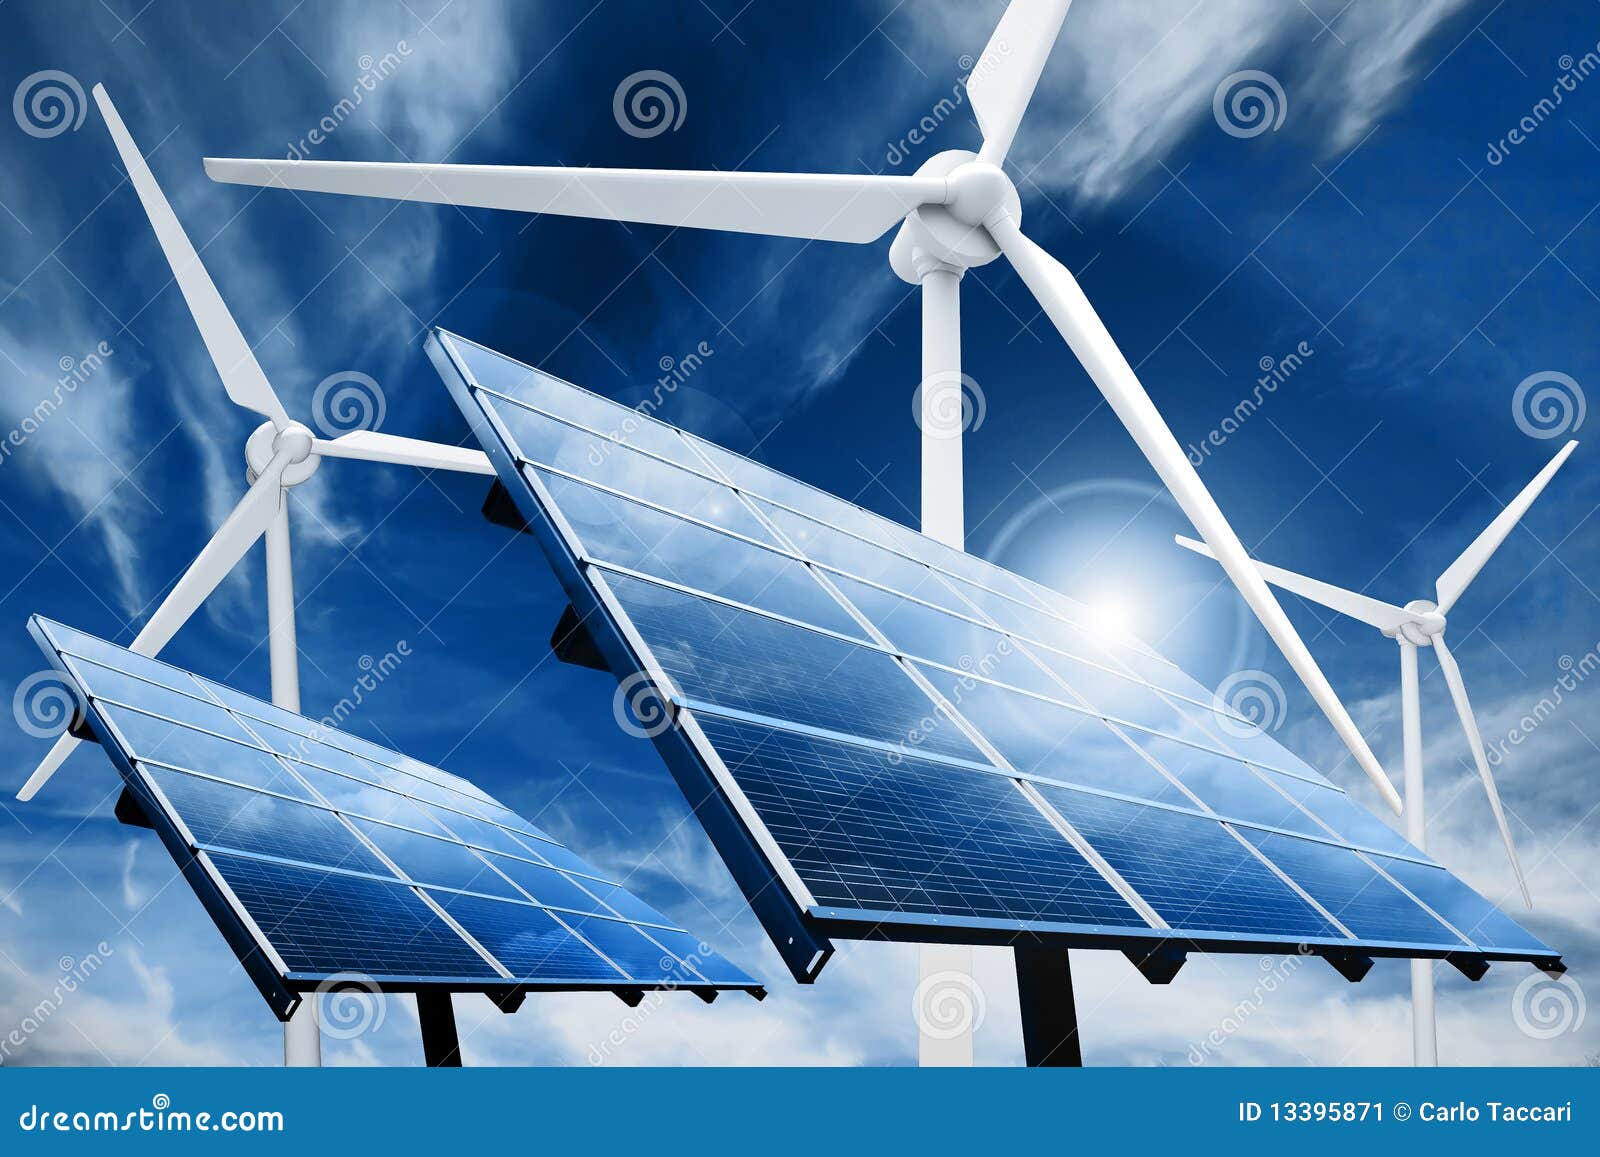 clean energy powerplant